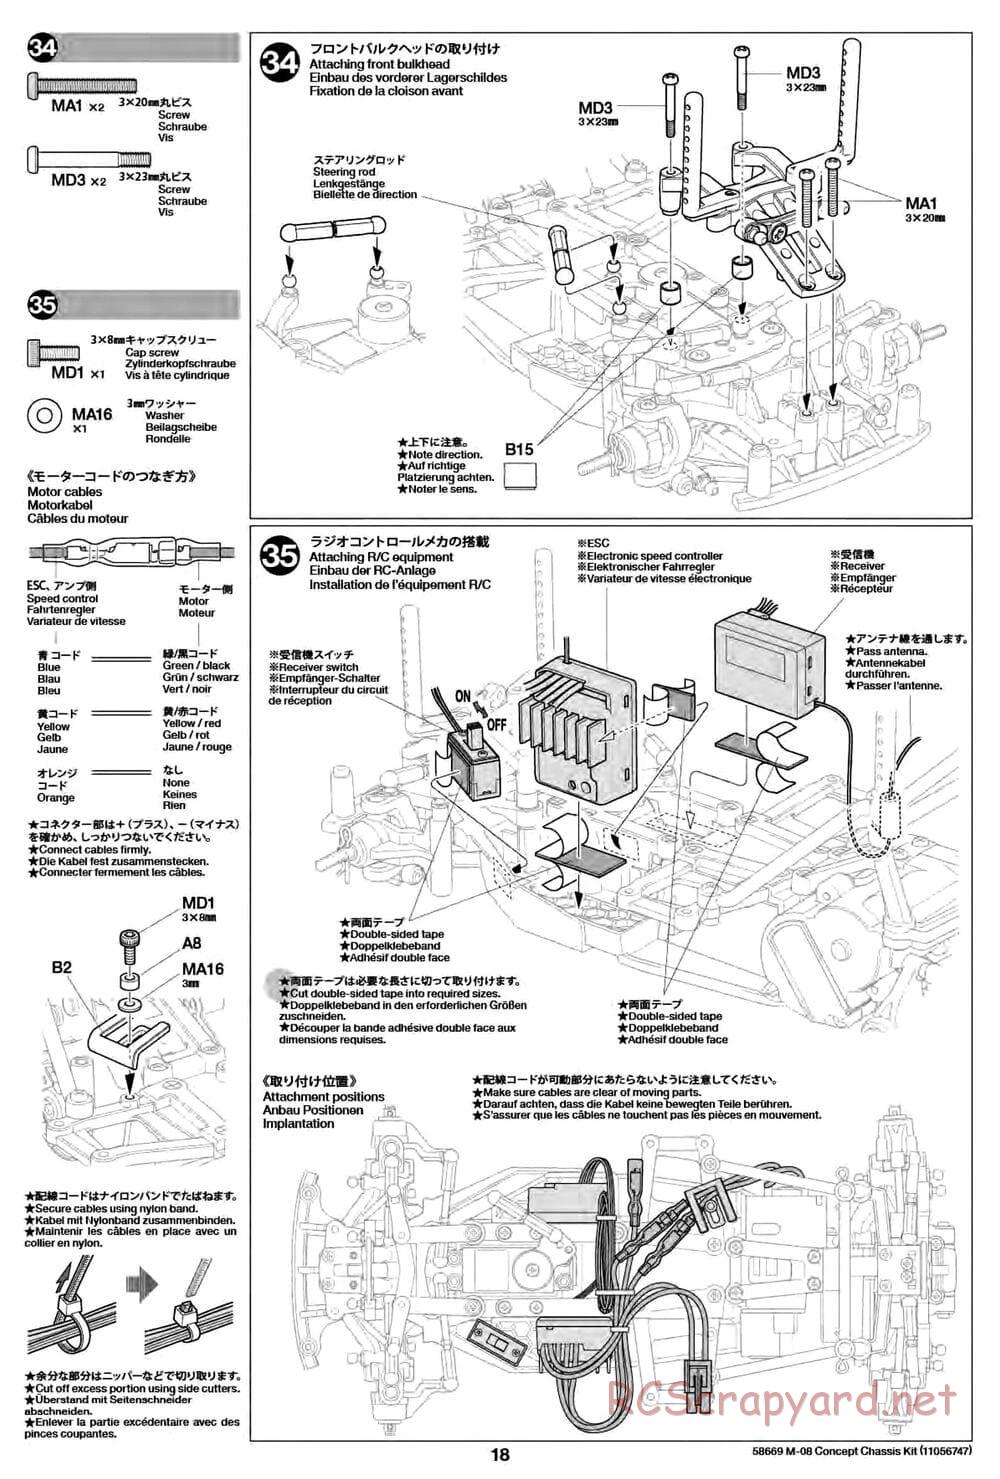 Tamiya - M-08 Concept Chassis - Manual - Page 18